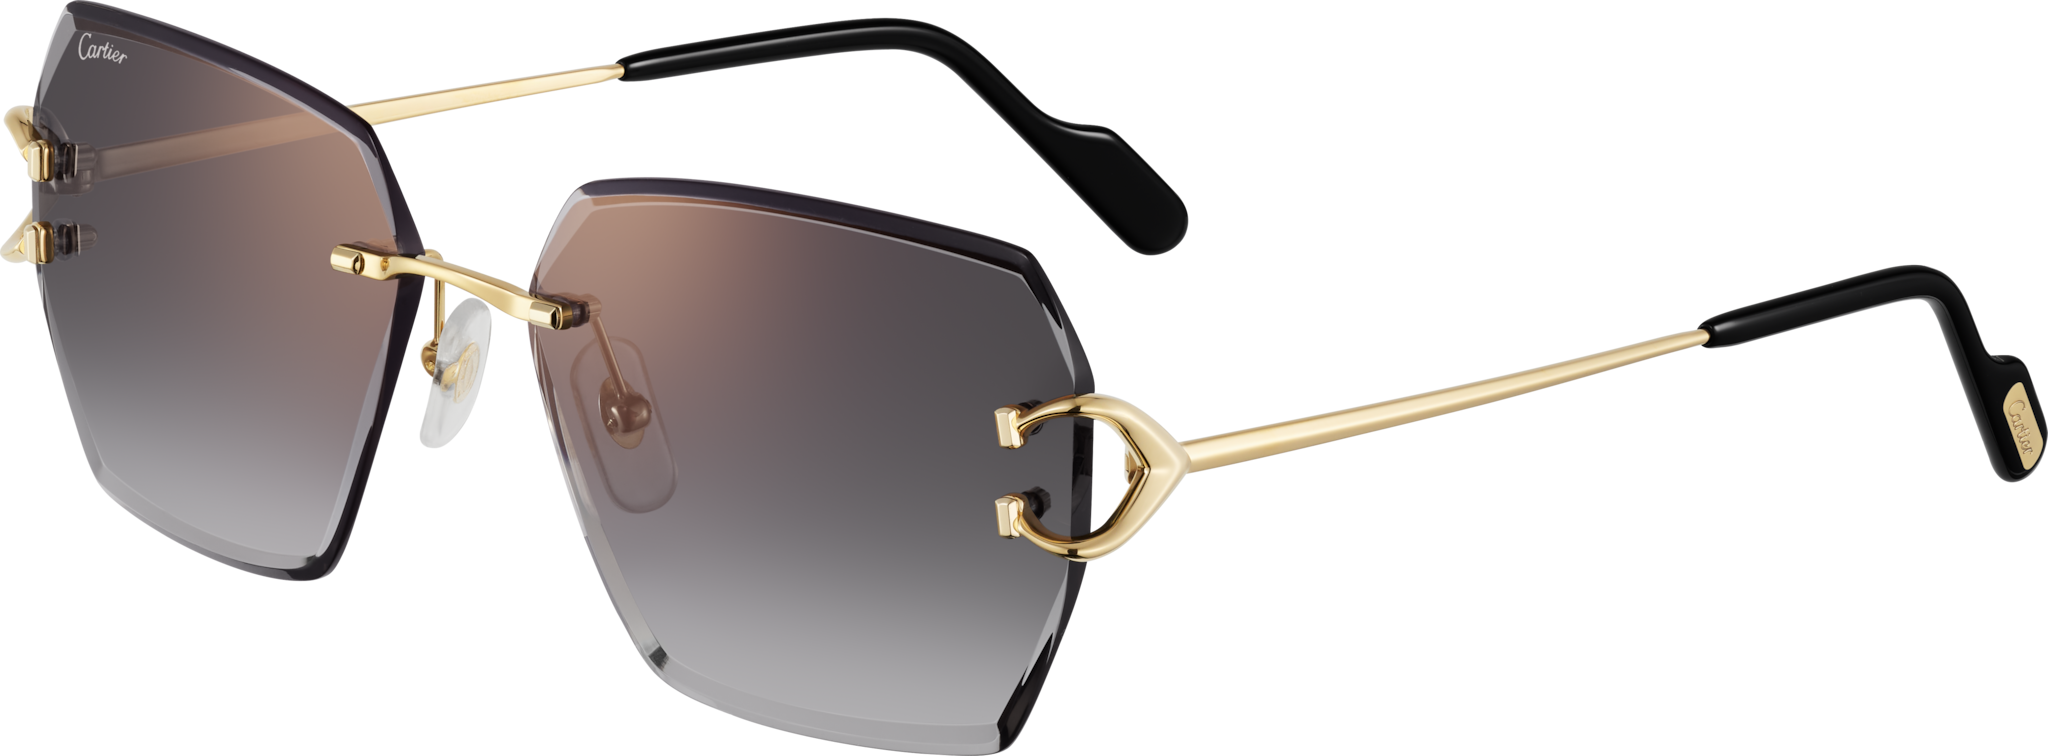 Signature C de Cartier SunglassesSmooth golden-finish metal, grey lenses